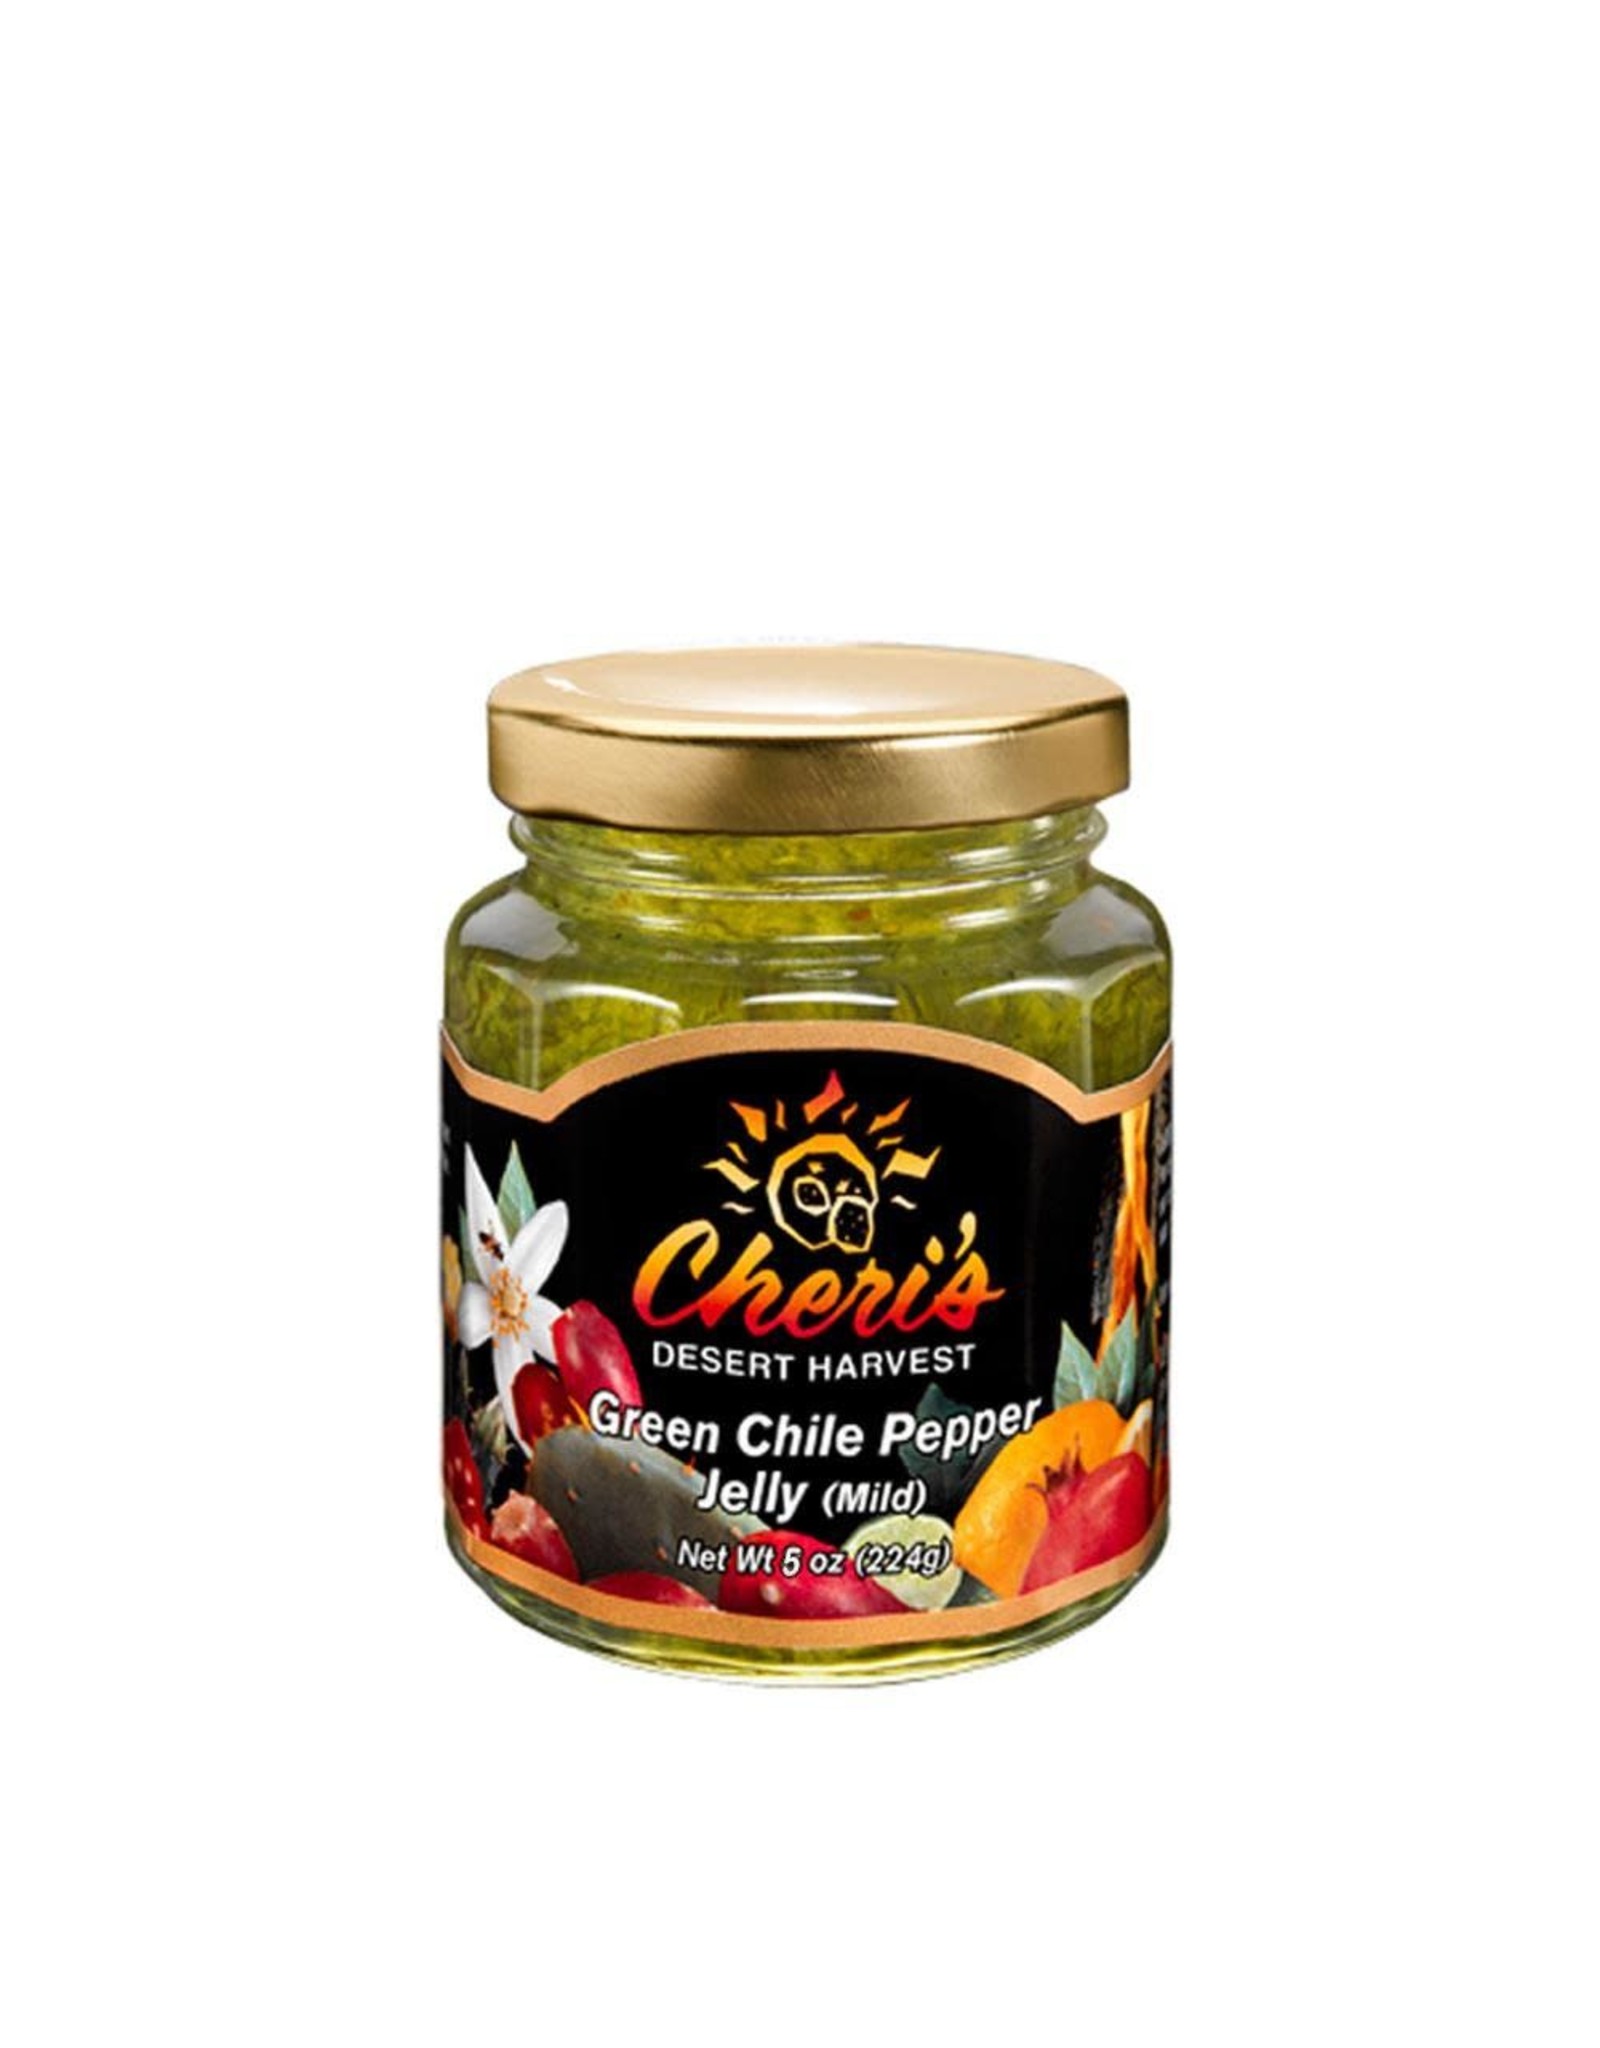 Cheri's Green Chile Pepper Jelly (Mild) 5 oz.